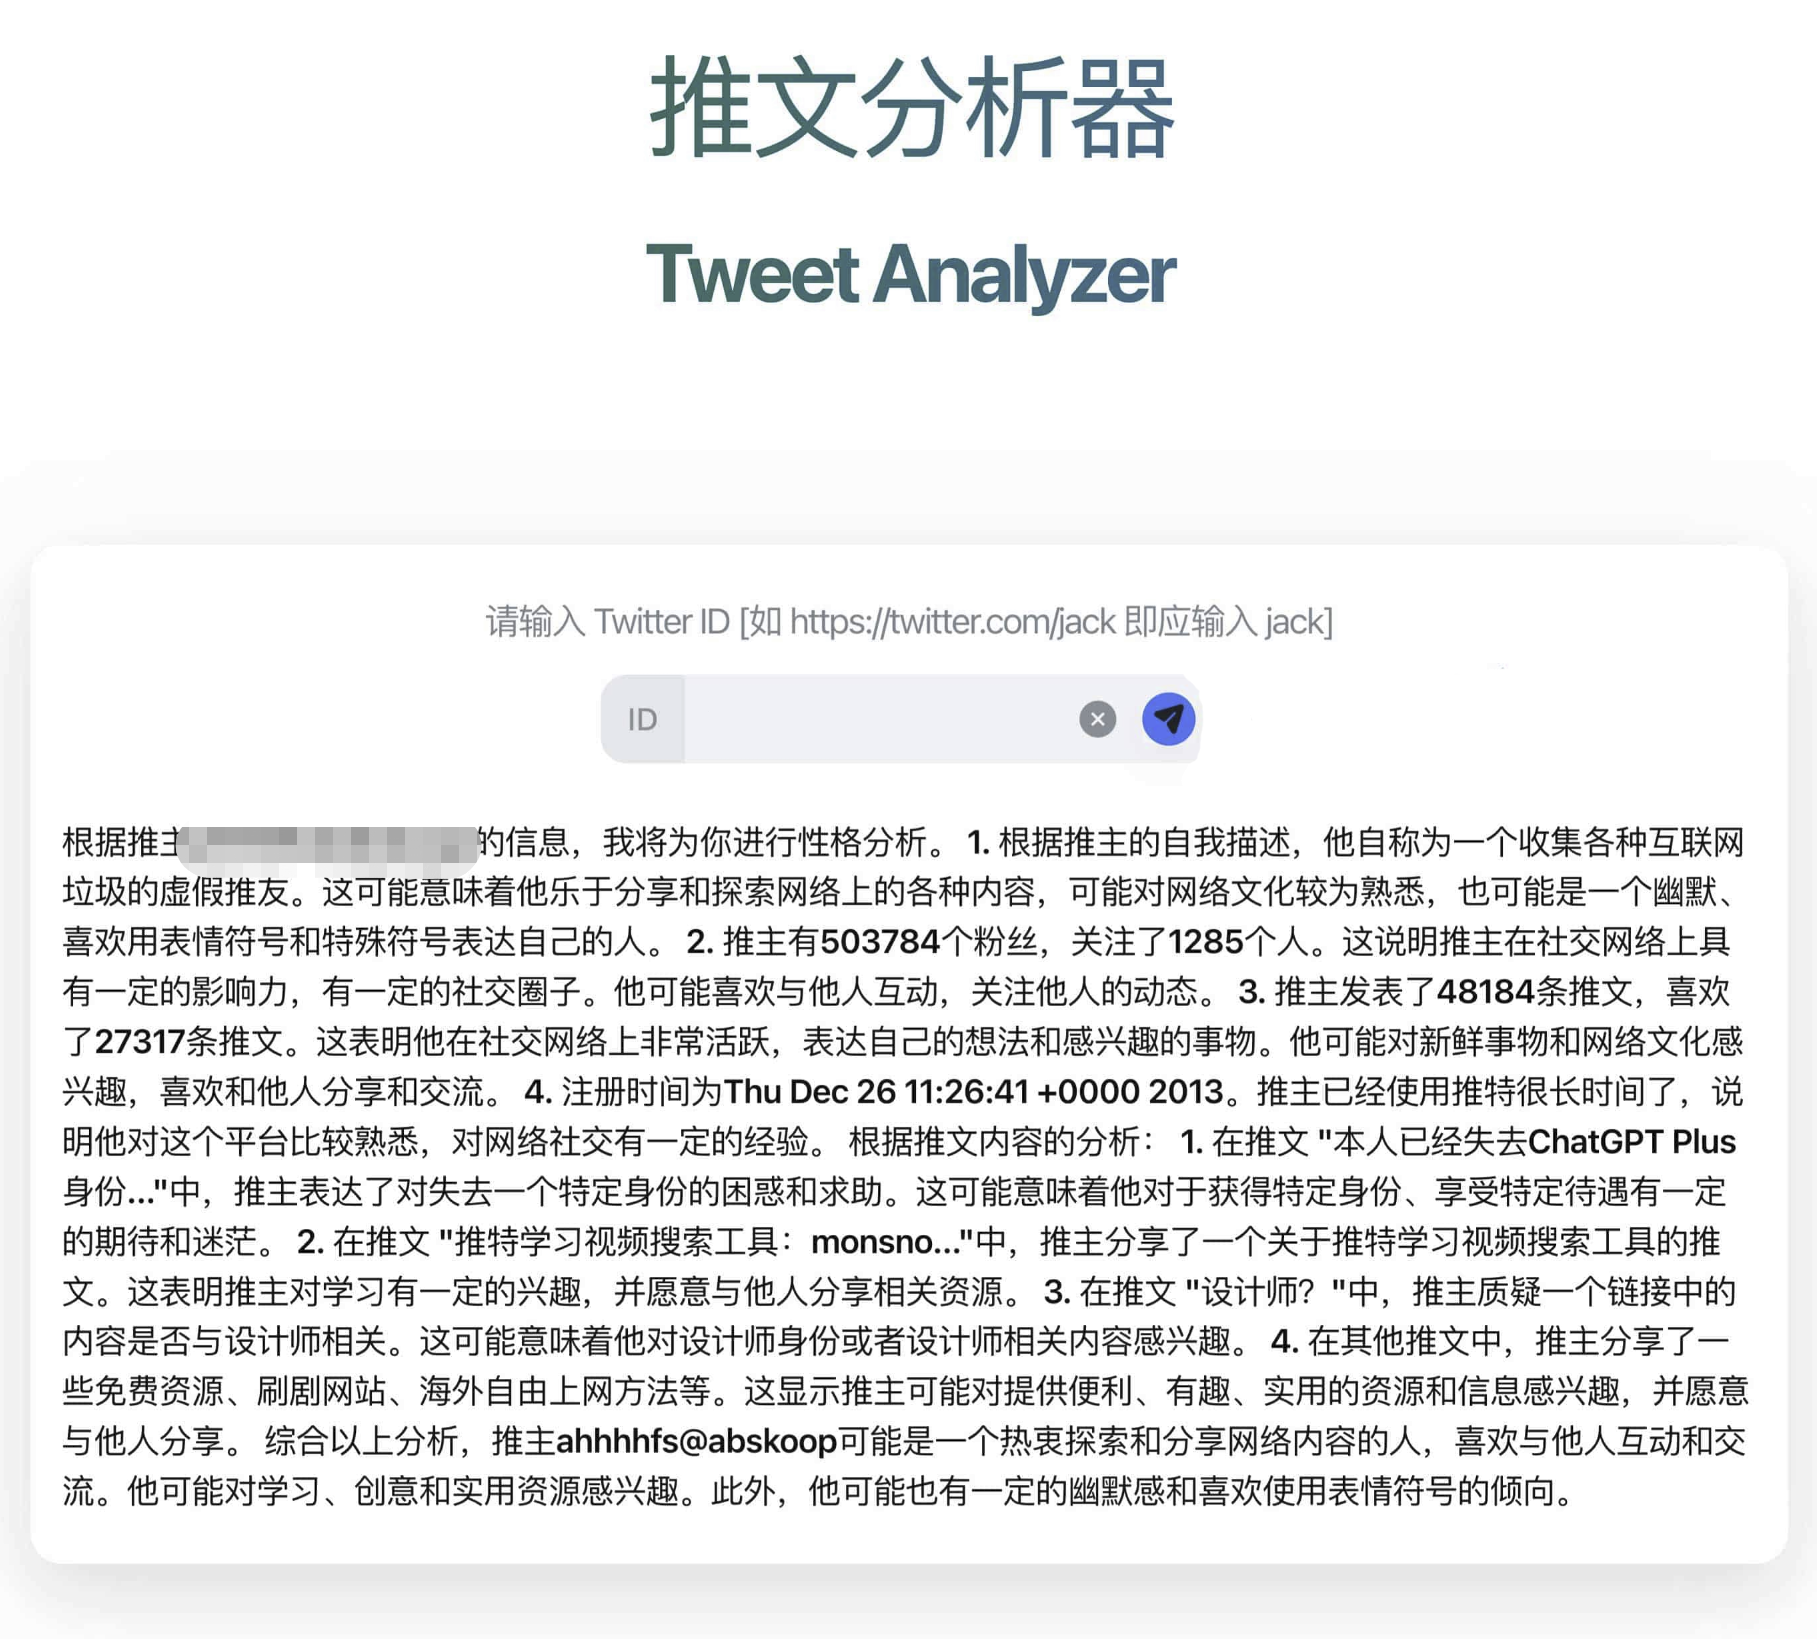 Tweet Analyzer-基于AI人工智能推文分析器-学点AIweb3中心